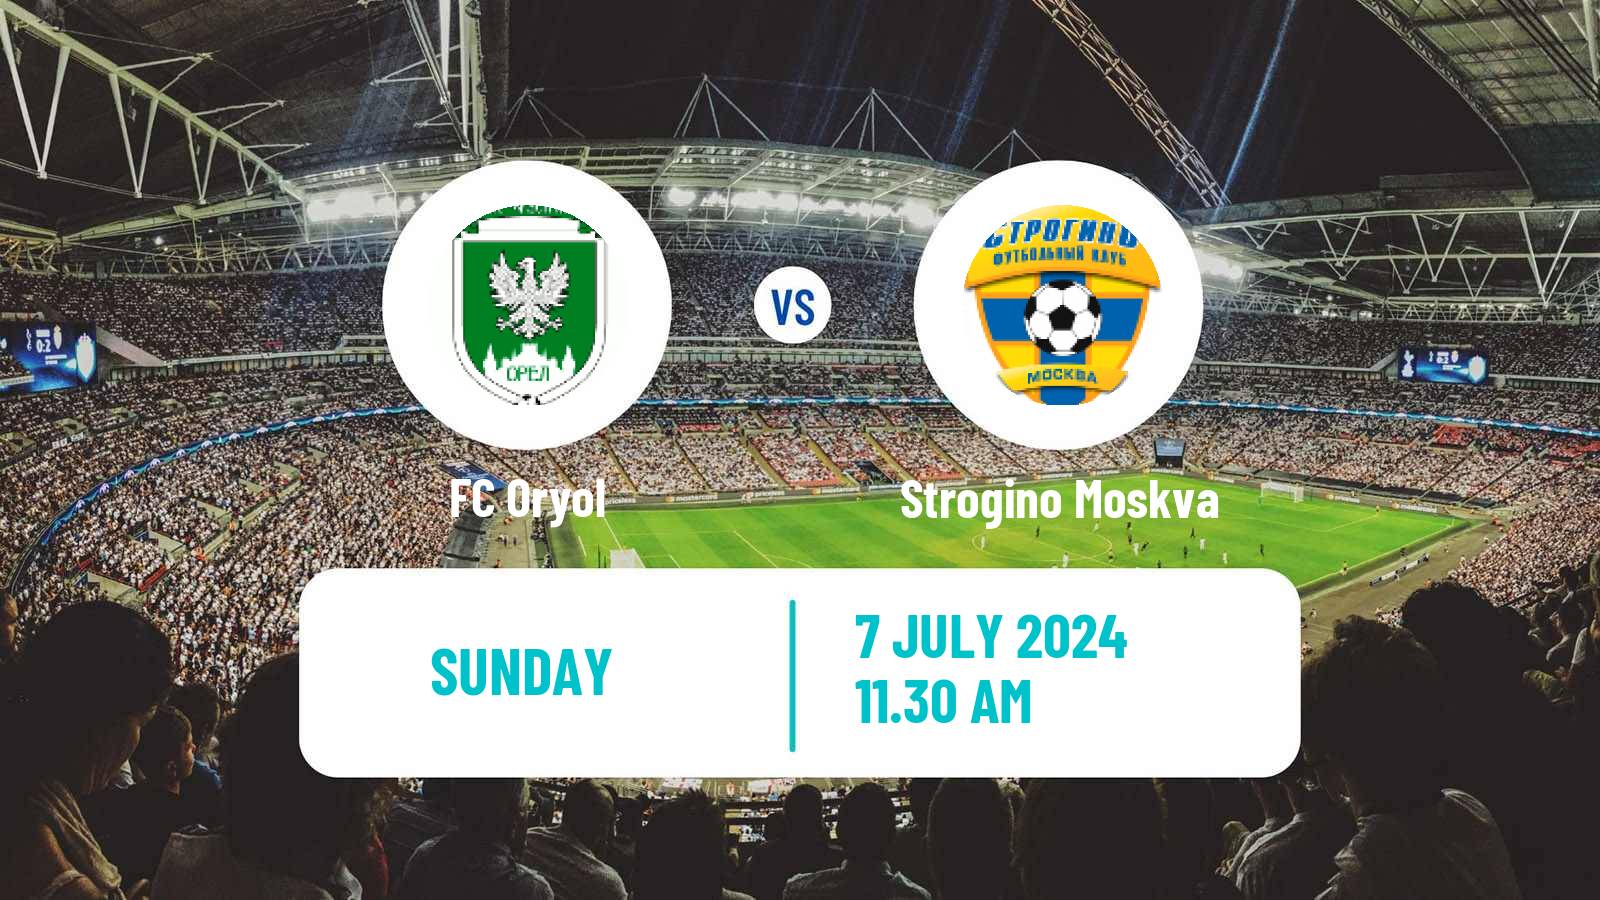 Soccer FNL 2 Division B Group 3 Oryol - Strogino Moskva